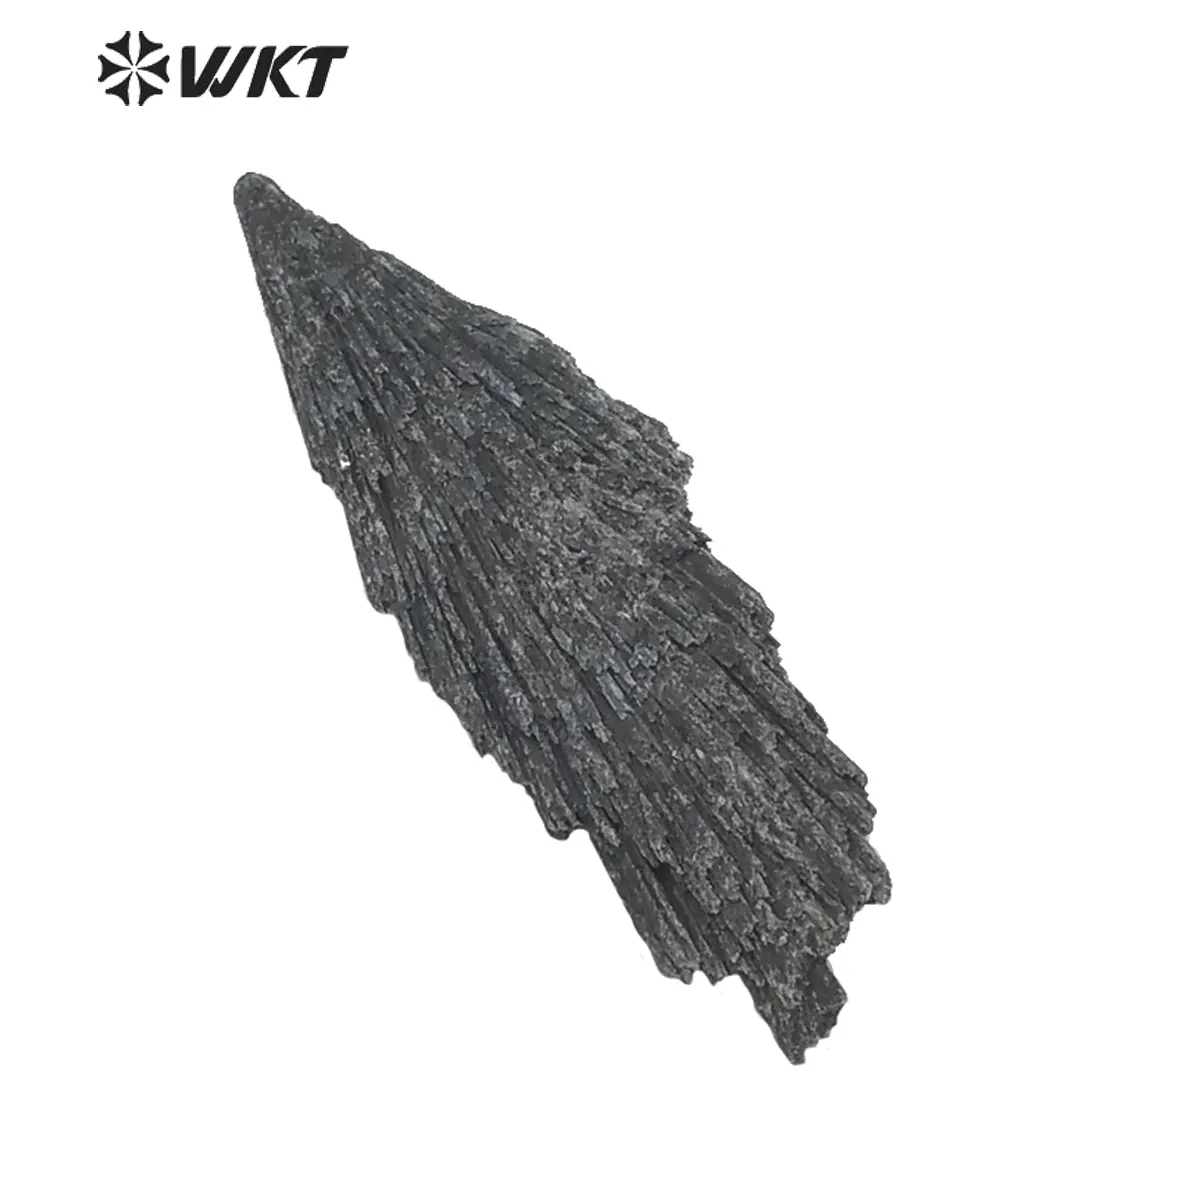 WT-G152 थोक काले Kyanite क्रिस्टल, रत्न खनिज प्राकृतिक रेकी हीलिंग काले Kyanite पत्थर